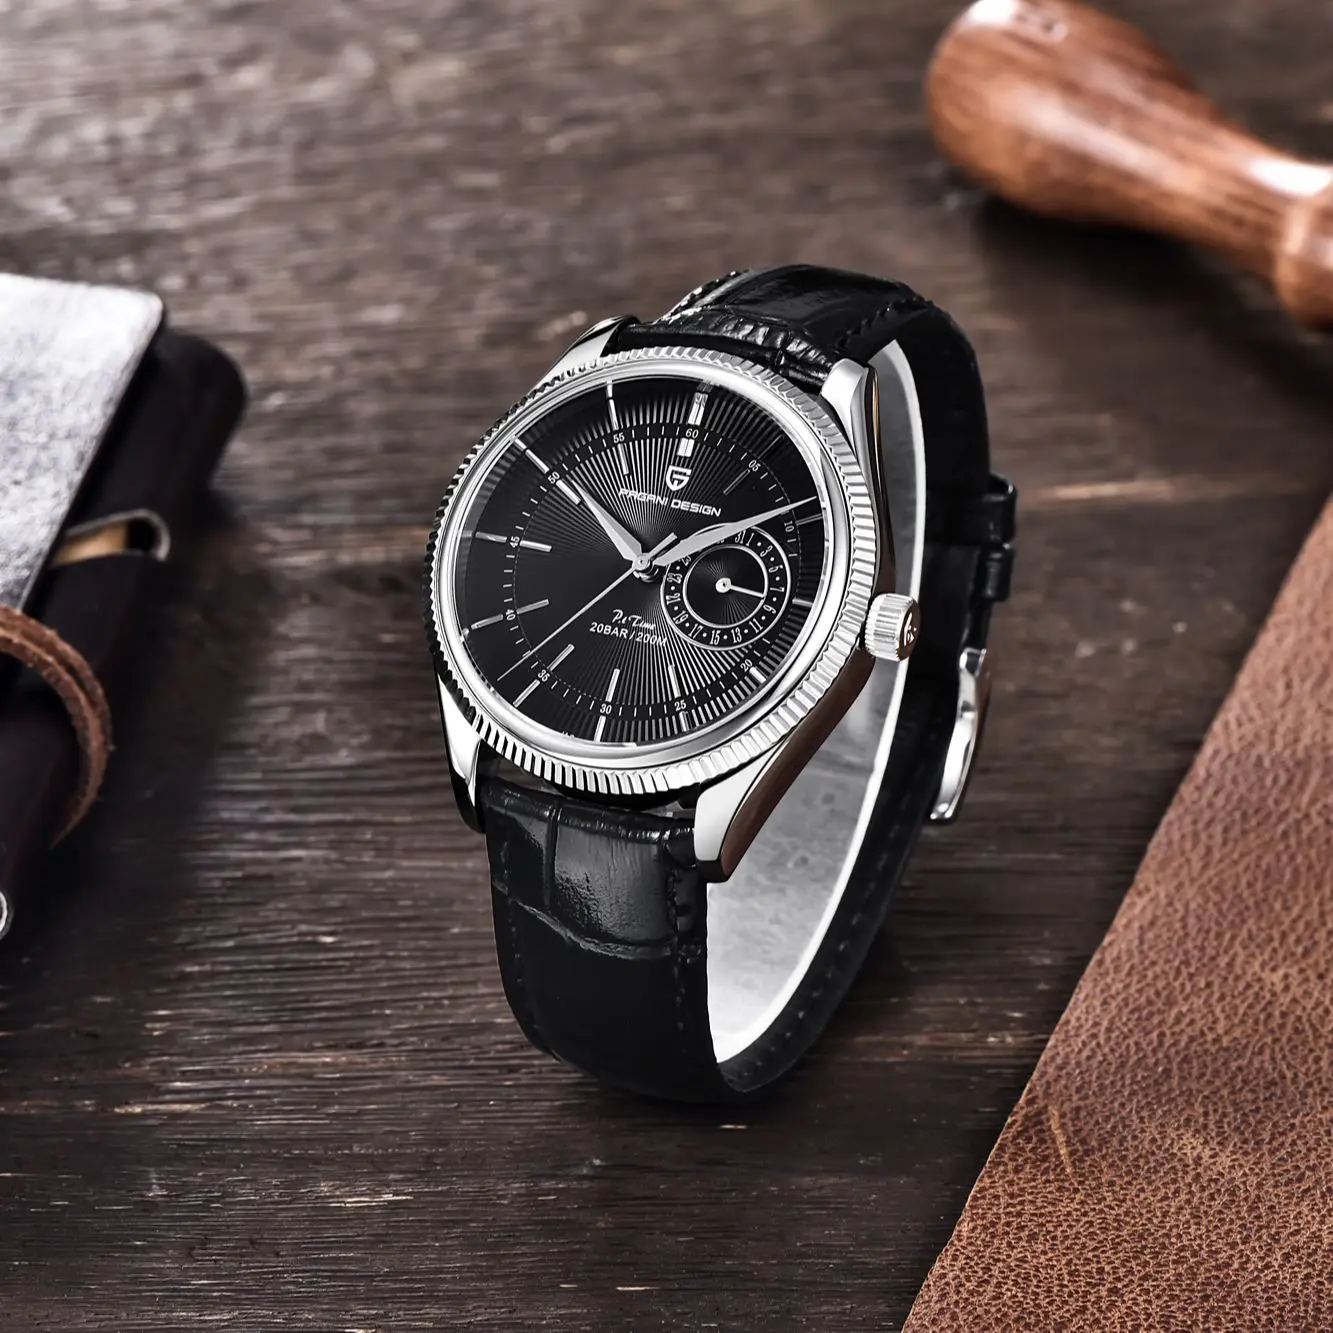 Pagani Design Leather Quartz Watch Sapphire Stainless Steel 200m Waterproof Clock Men's Sports Watch SEIKO VH65 Movement Clock enlarge